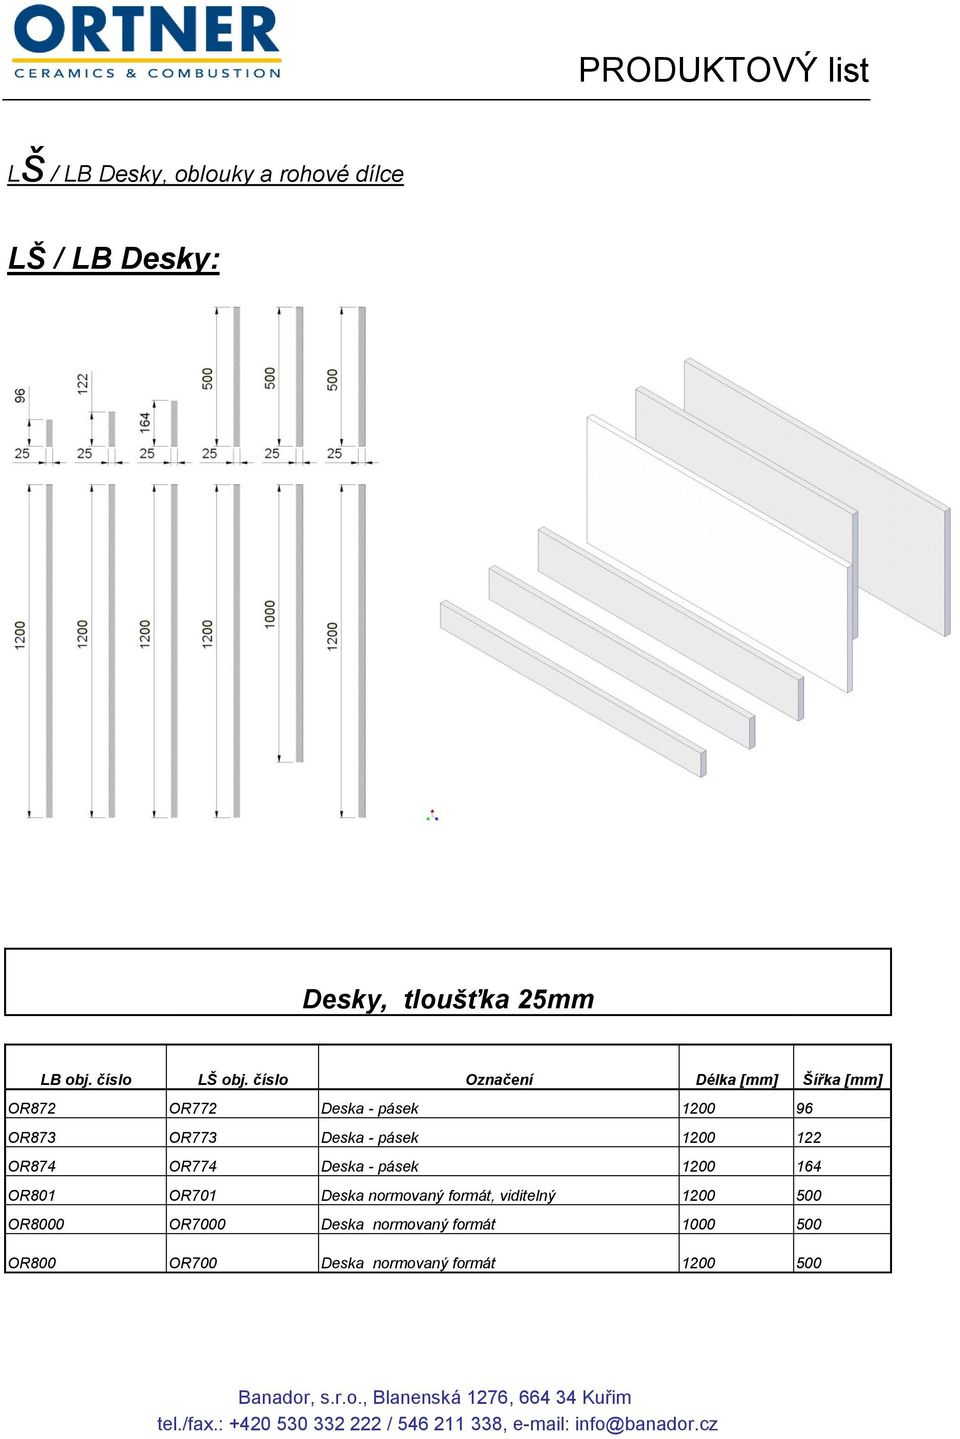 pásek 1200 122 OR874 OR774 Deska - pásek 1200 164 OR801 OR701 Deska normovaný formát, viditelný